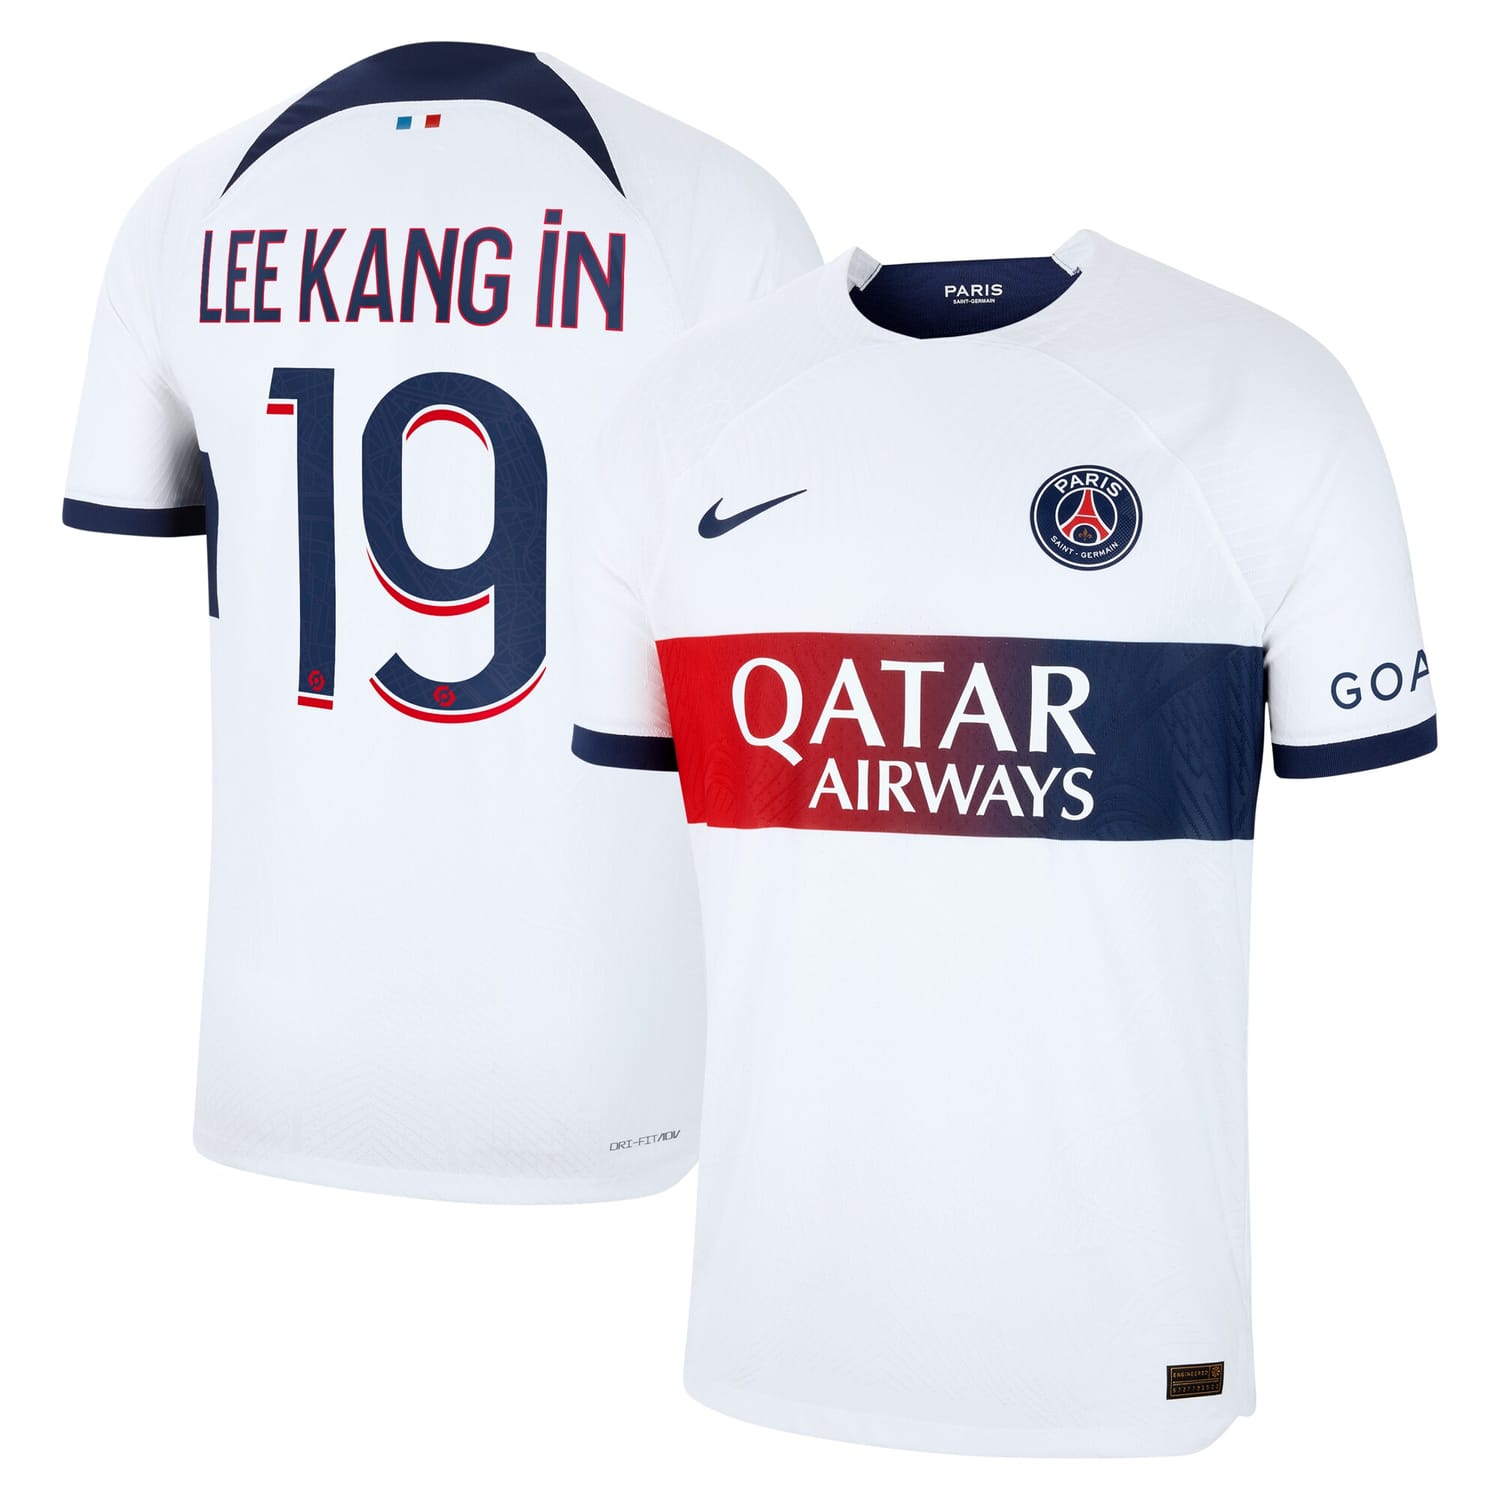 Ligue 1 Paris Saint-Germain Away Authentic Jersey Shirt 2023-24 player Lee Kang In 19 printing for Men